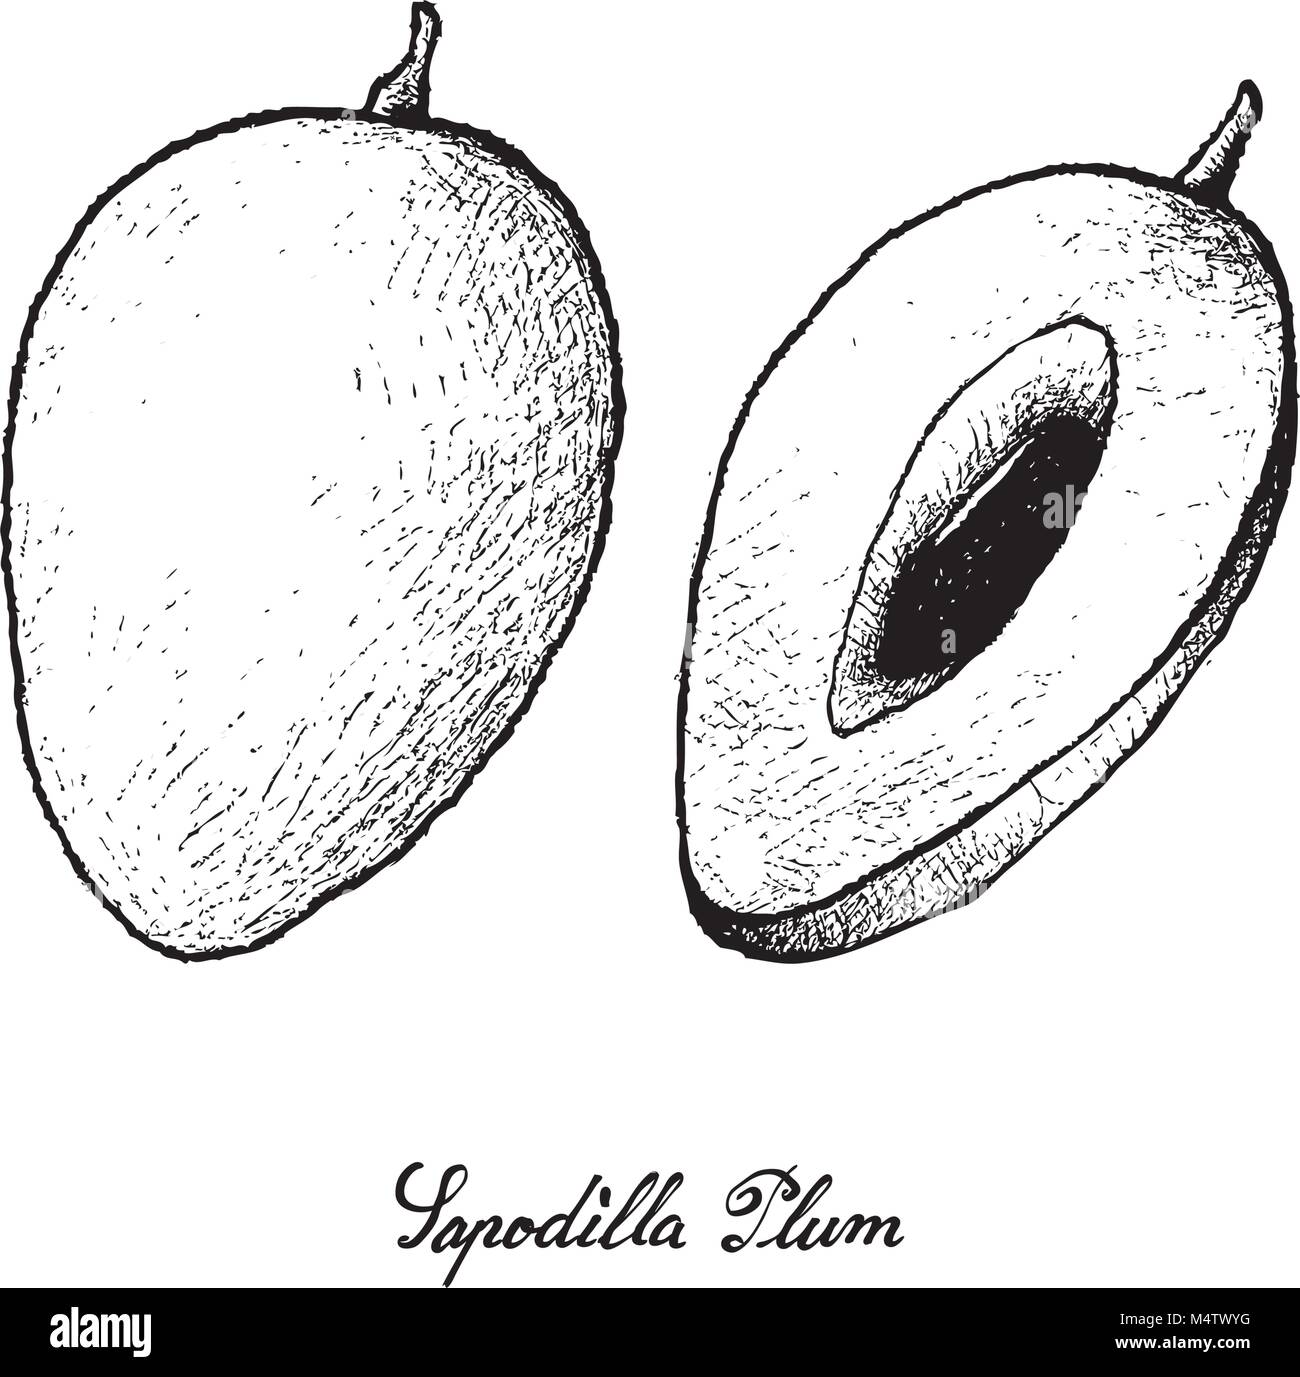 Tropical Fruits, Illustration of Hand Drawn Sketch Sapodilla Plum or Manilkara Zapota Fruits Isolated on White Background. Stock Vector